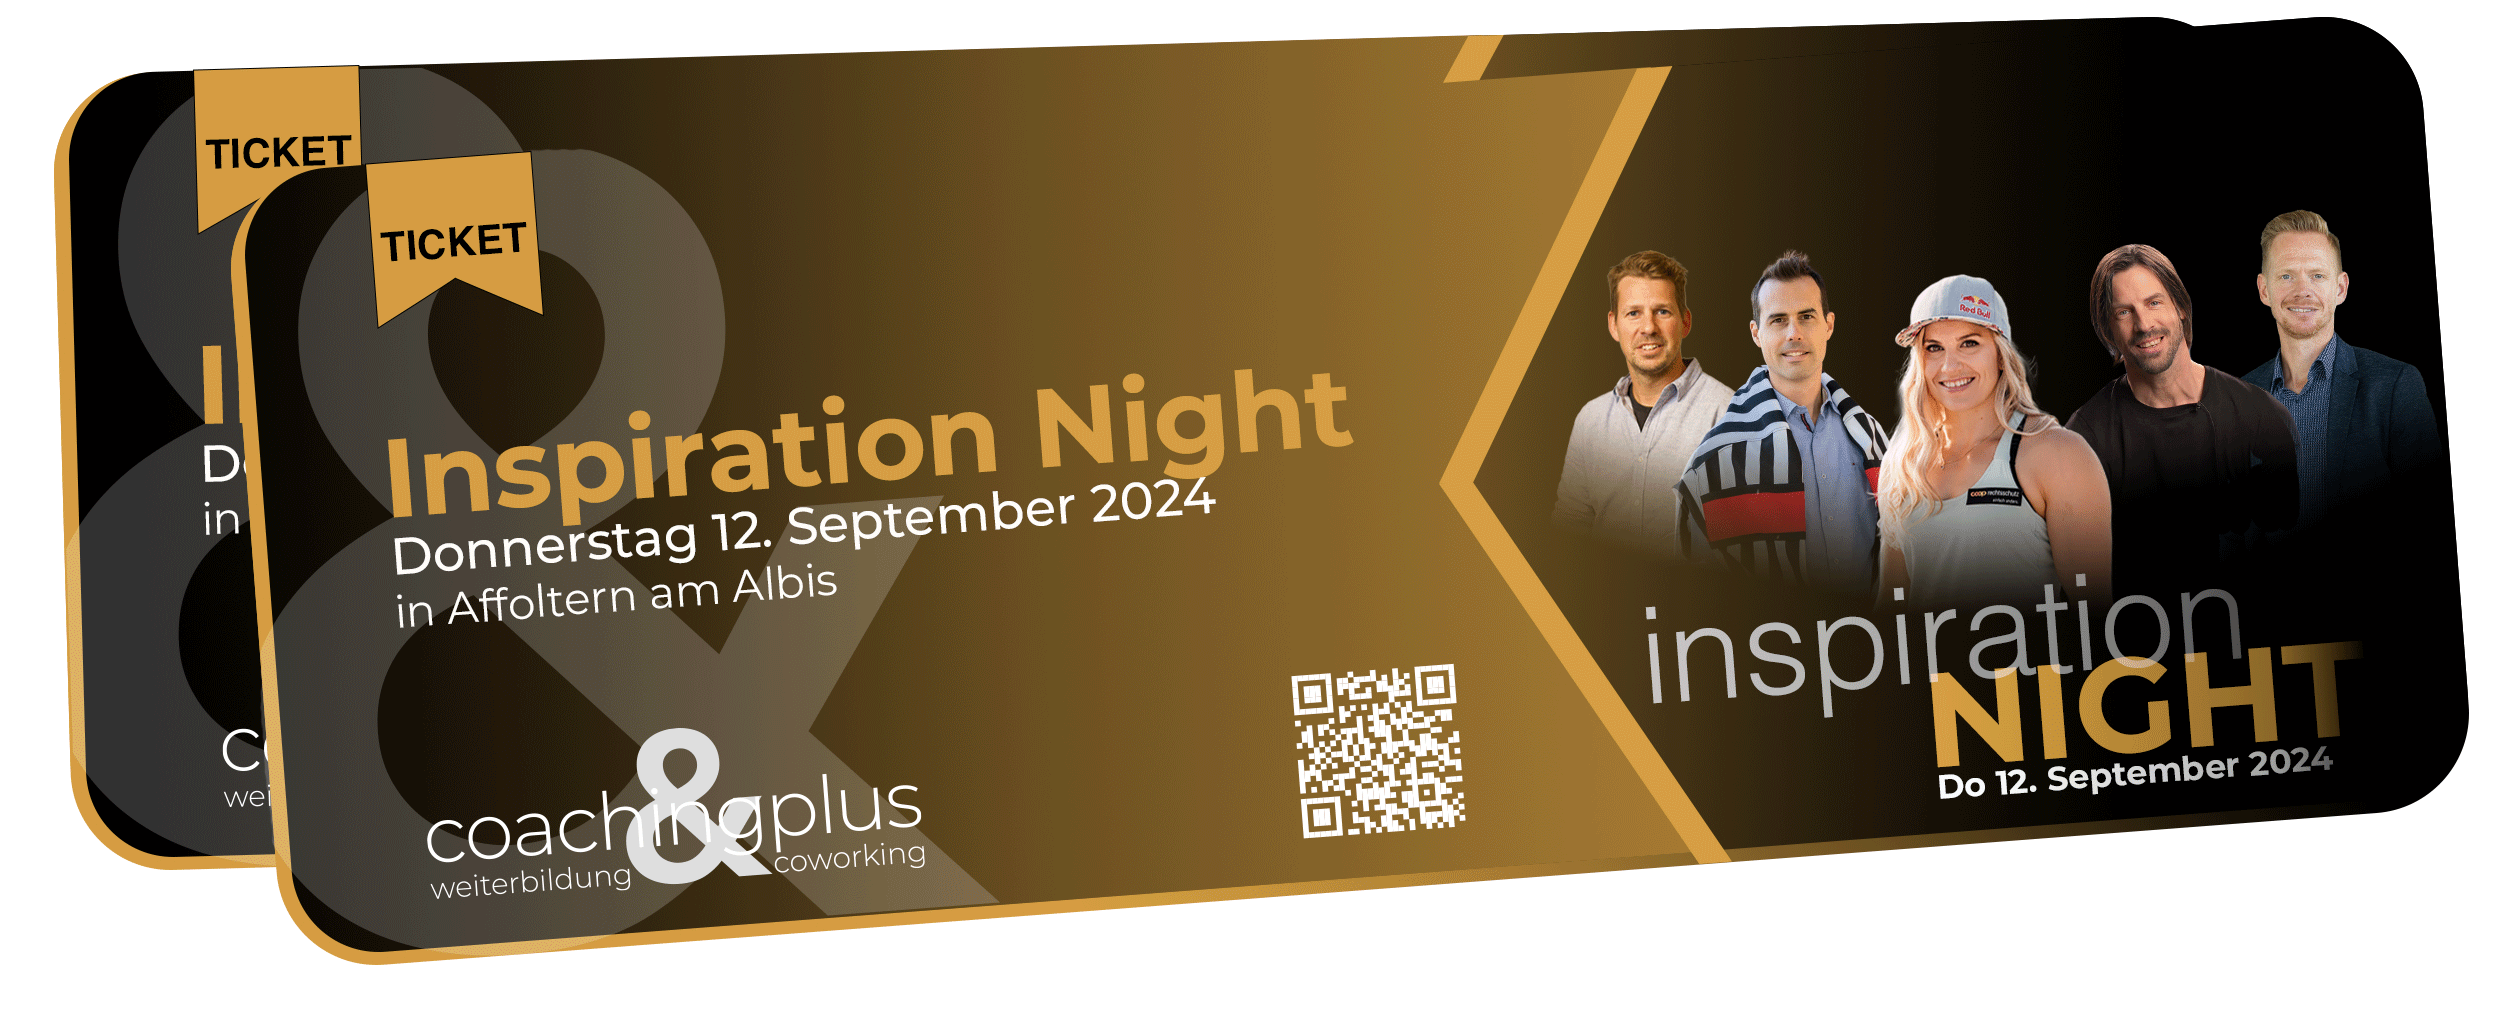 inspiration night tickets